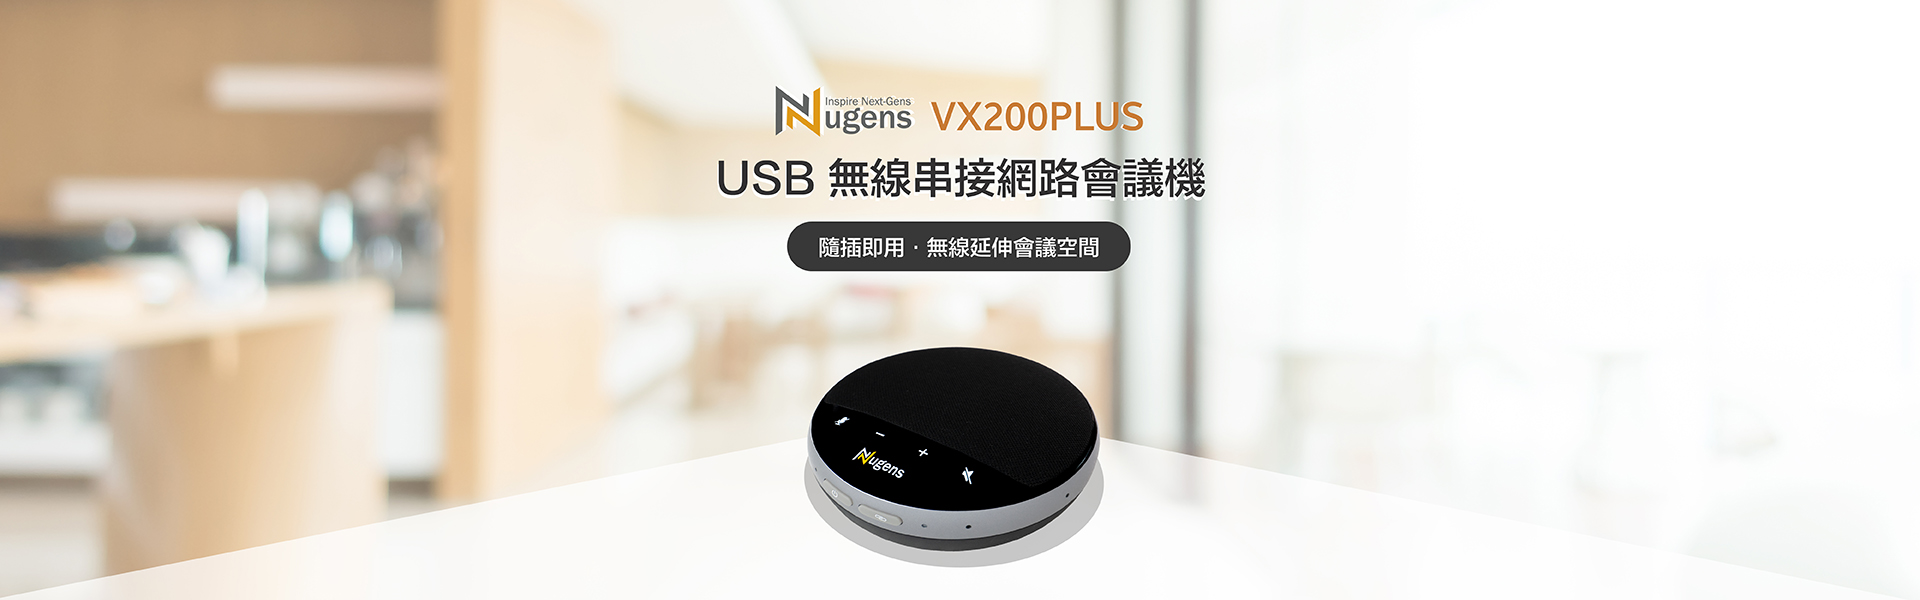 Nugens VX200PLUS USB串接網路會議機Banner